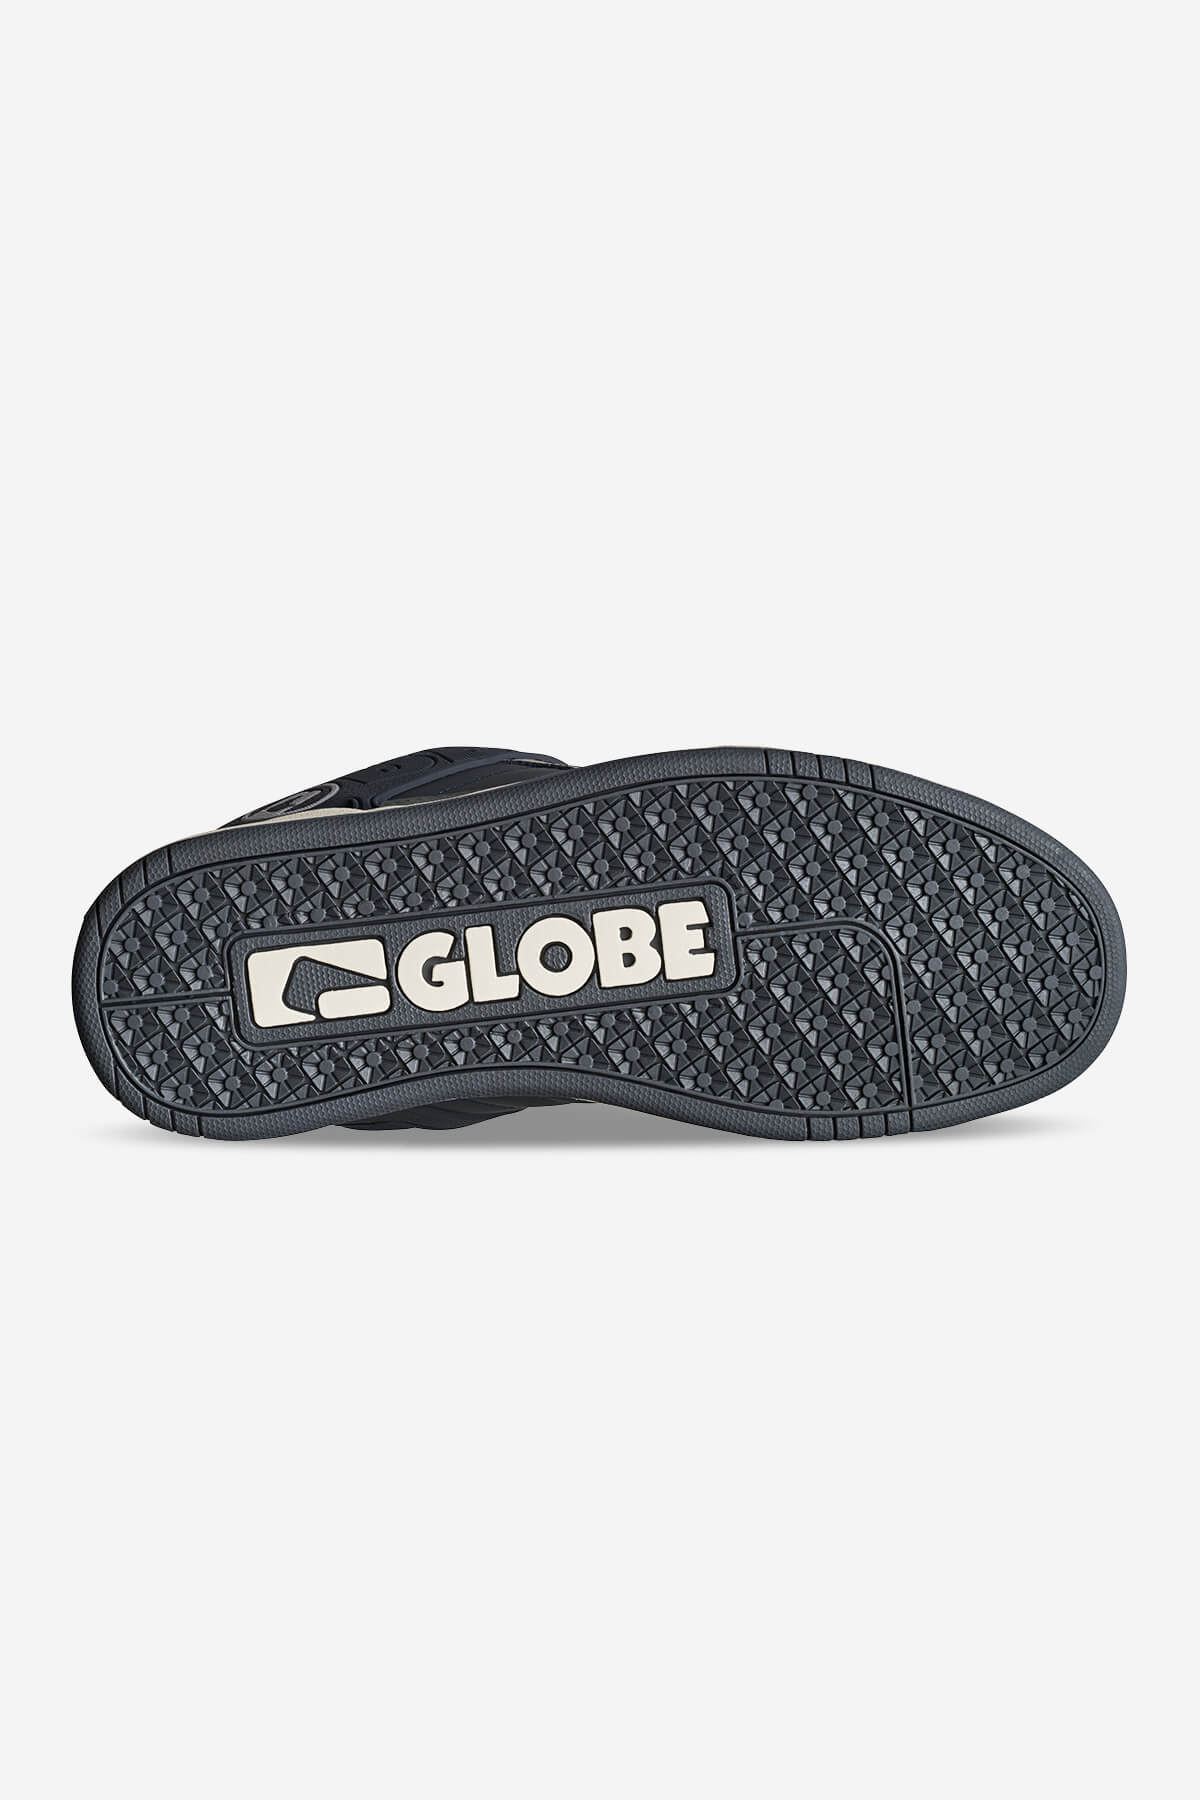 Globe - Tilt - Ebano/Charcoal - skateboard Scarpe